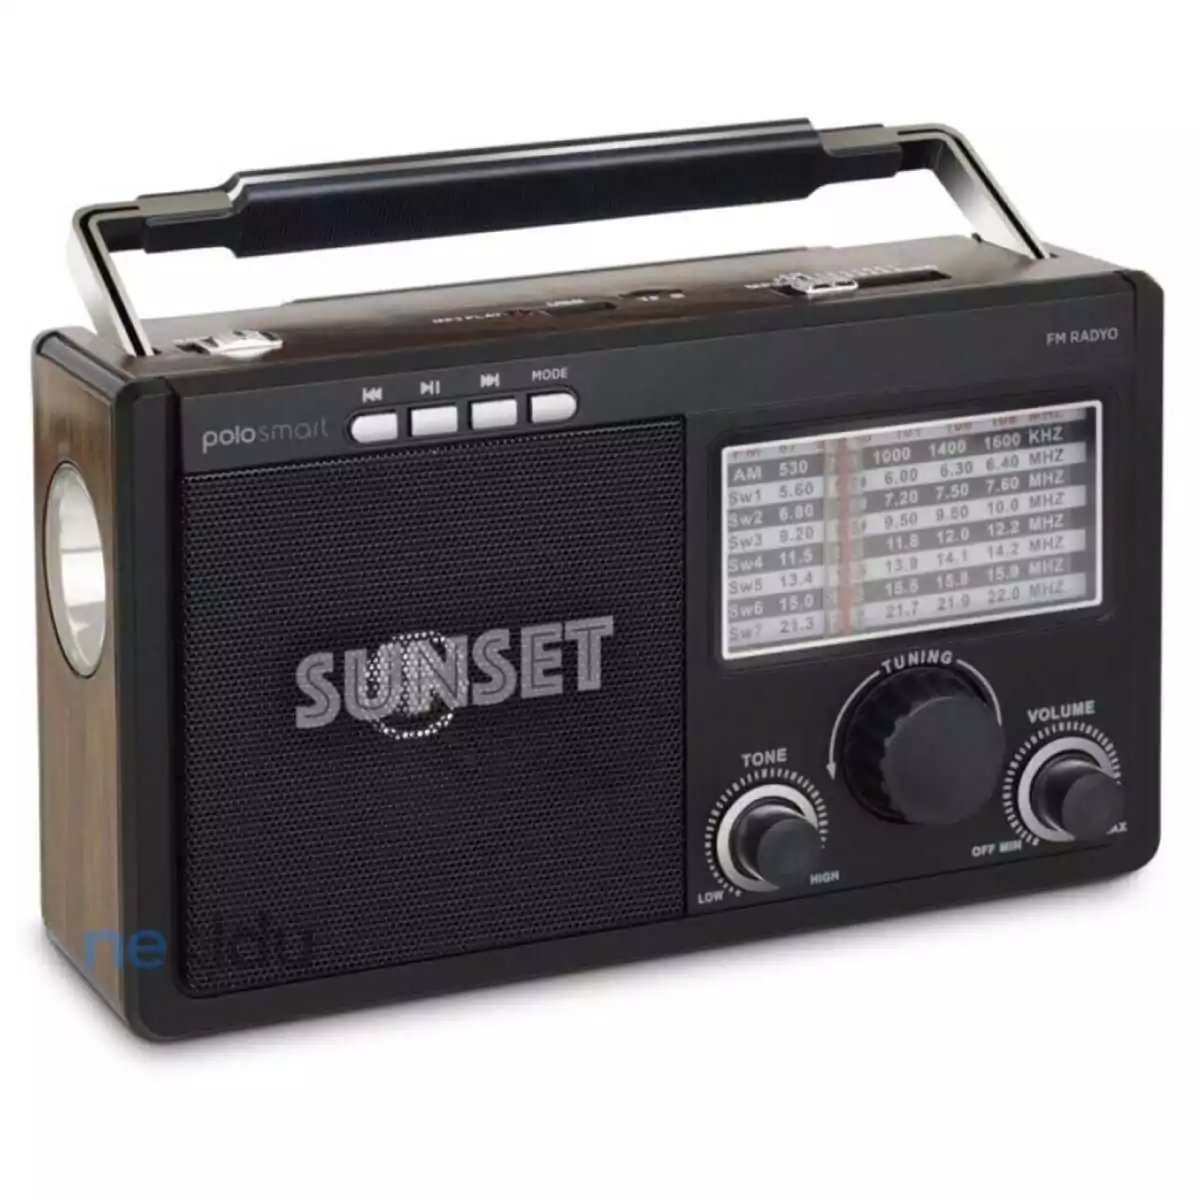 Nostaljik radyo